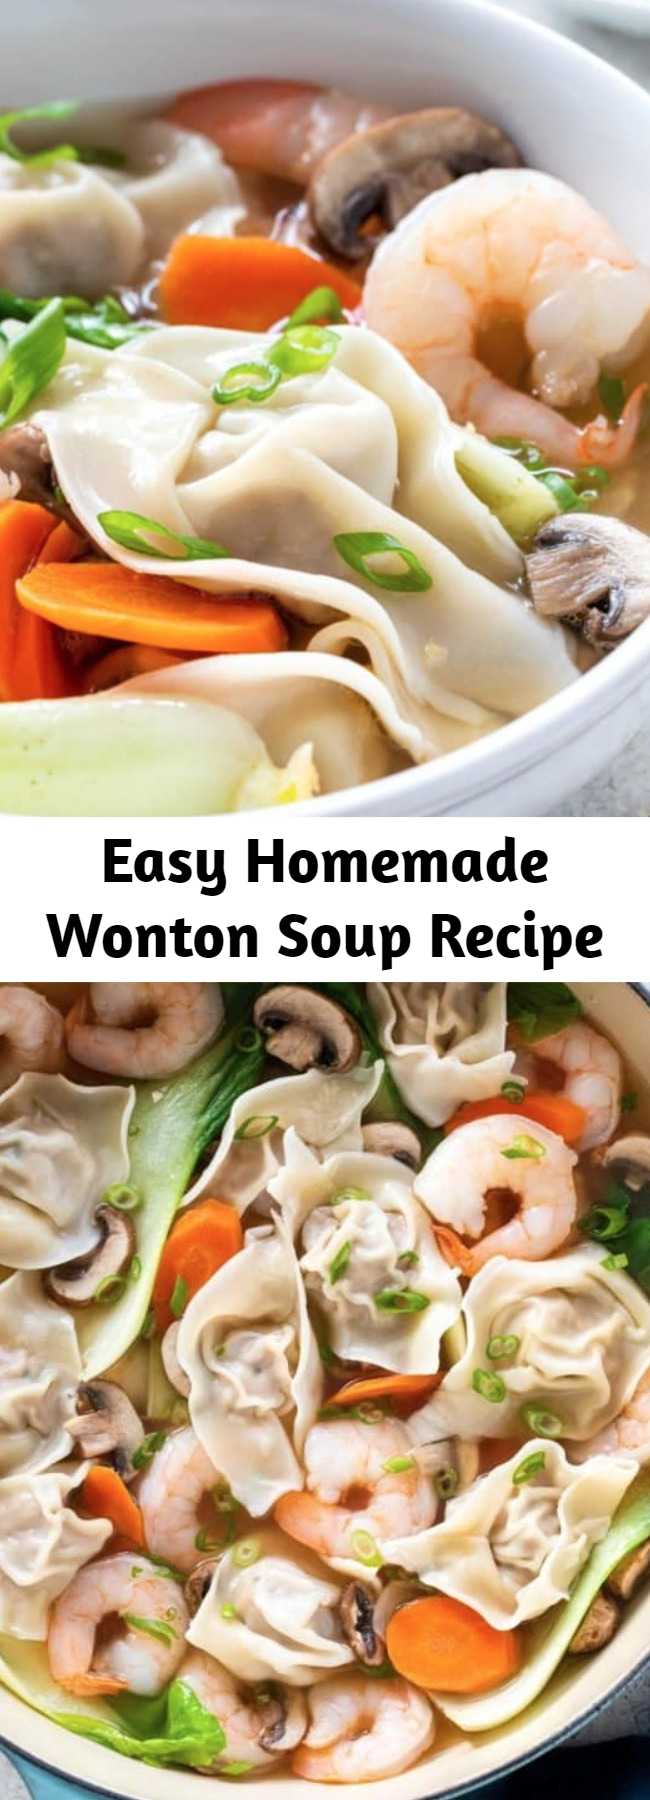 Easy Homemade Wonton Soup Recipe - This authentic homemade wonton soup recipe is easy and fun to make! Each hearty bowl is packed with plump pork dumplings, fresh vegetables and jumbo shrimp. #wontonsoup #chinesefood #dumplings